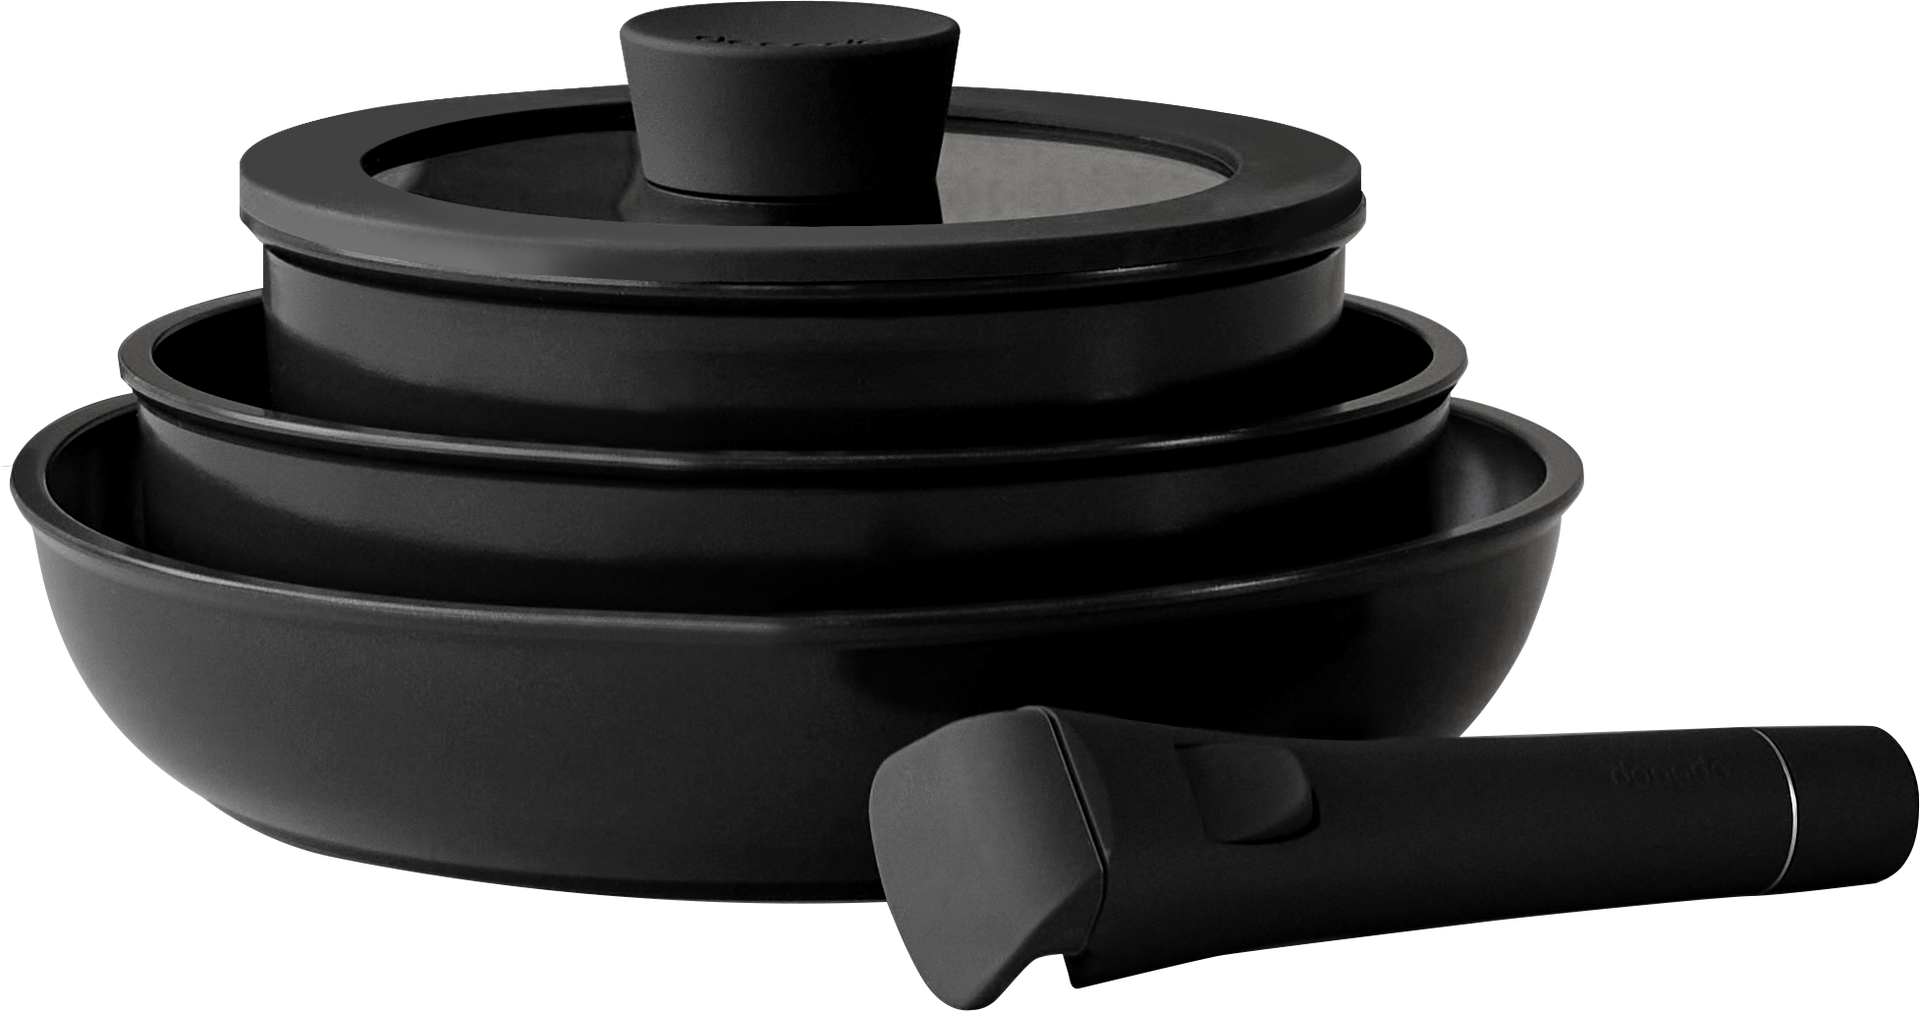 DOGADO Multi Purpose Detachable Handle All-in-One Cookware Set 6